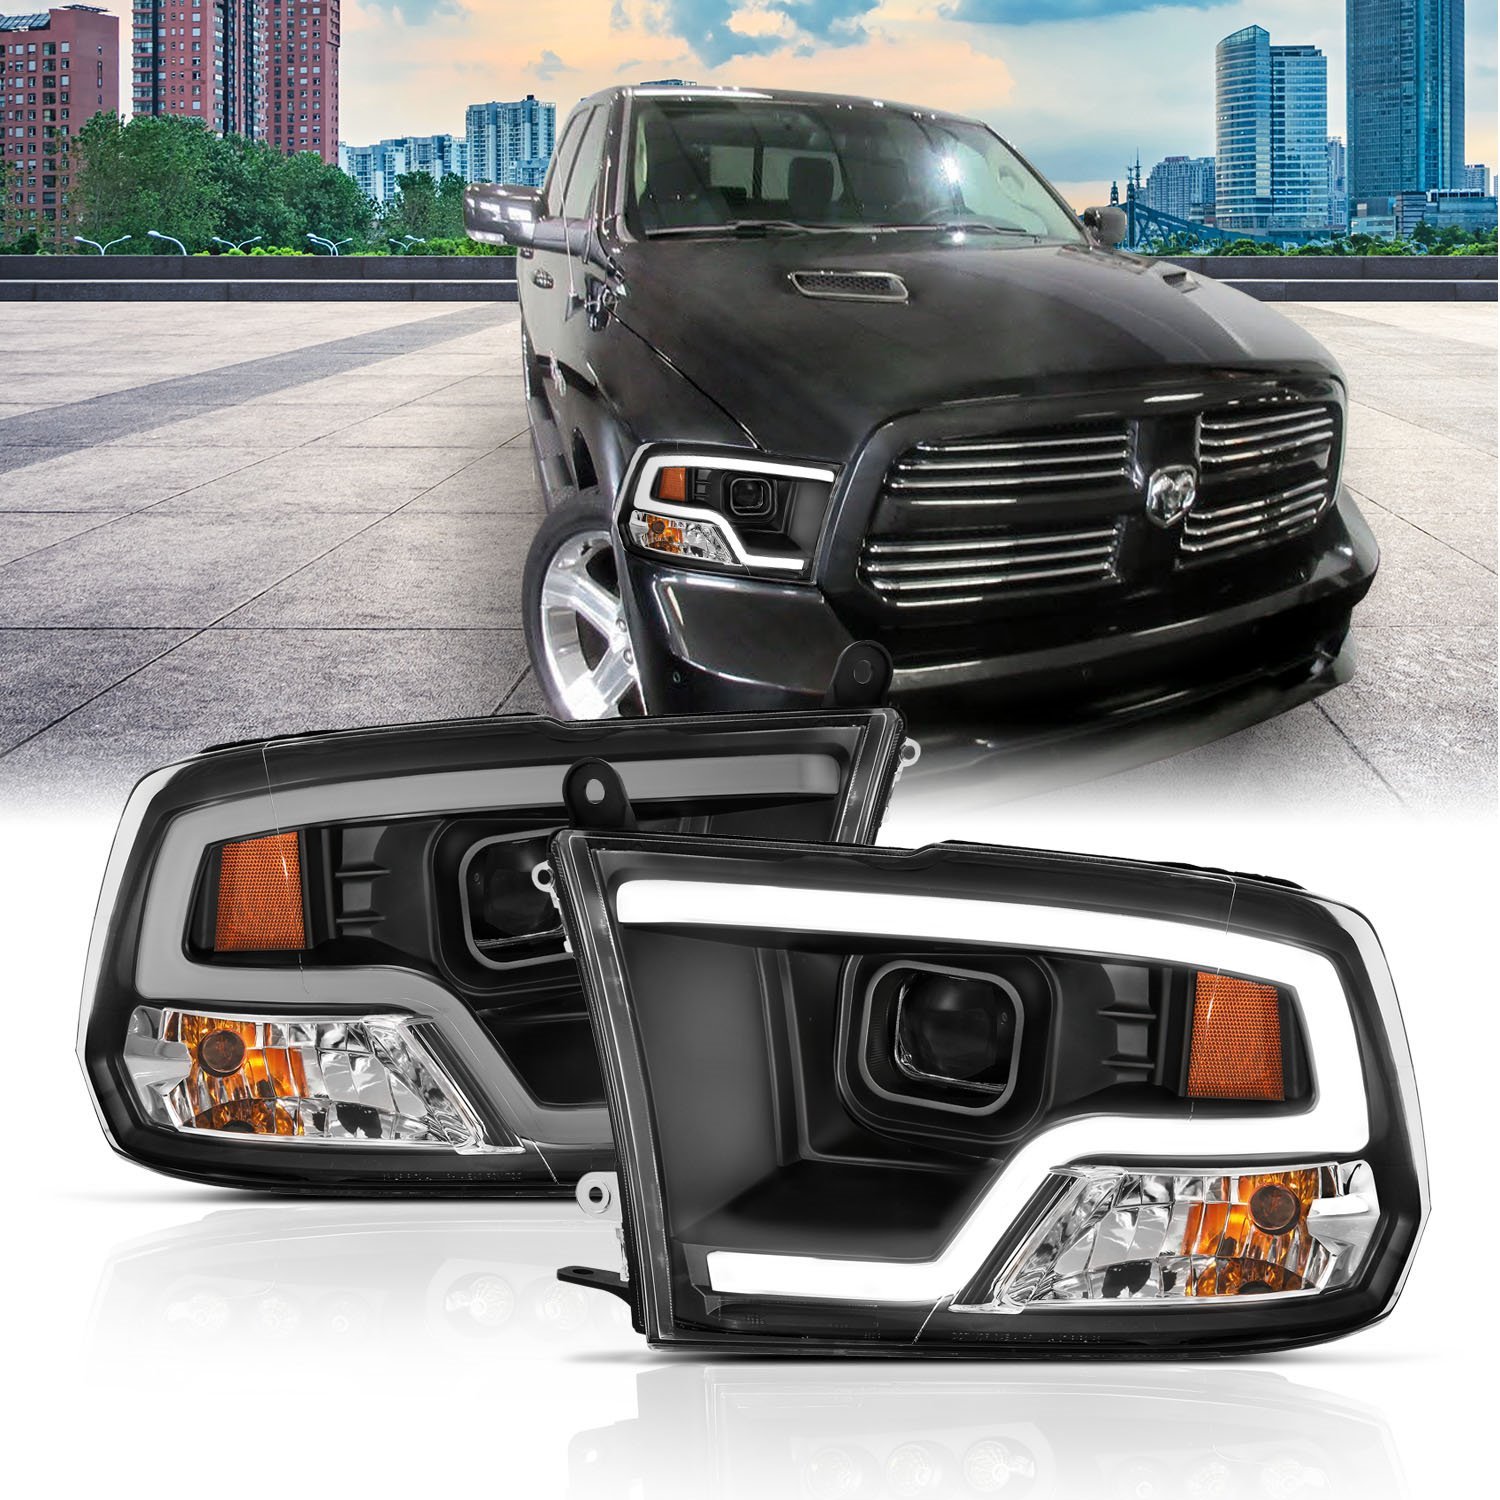 111404 Projector Black Housing Halogen Headlights Fits Select Dodge/Ram 1500, 2500, 3500 Trucks [Plank Style, Clear Lens]